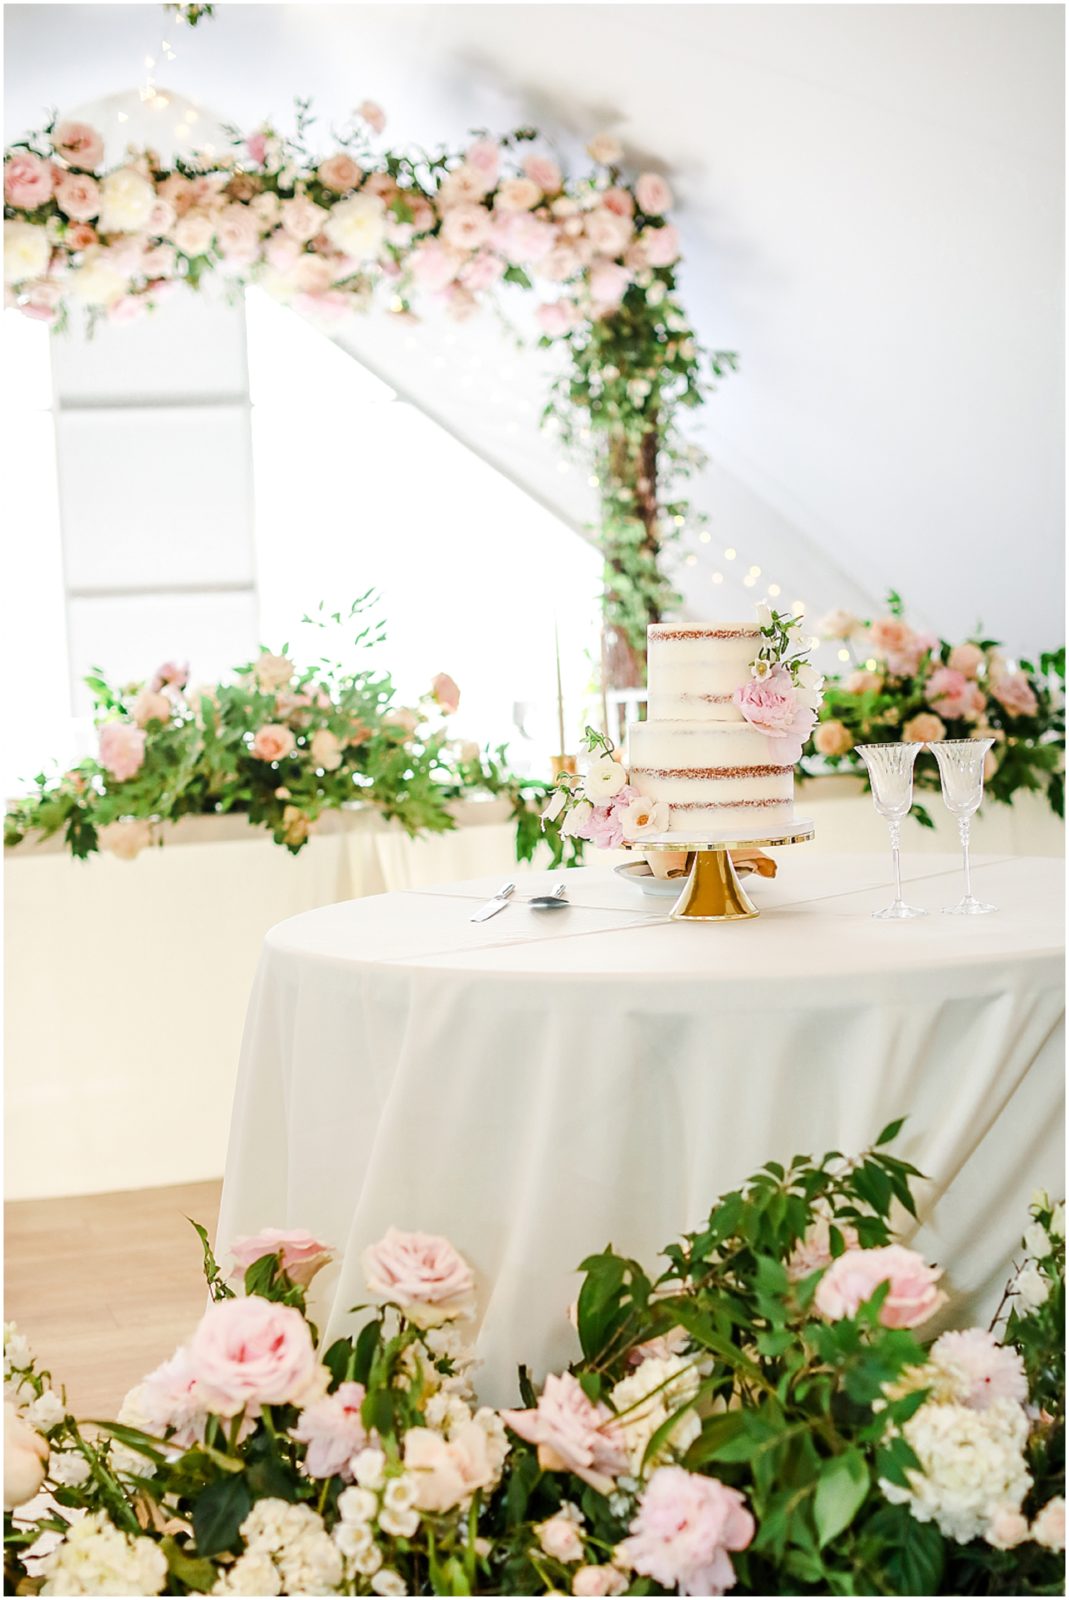 blue bouquet KC - wedding florist - longview mansion wedding reception and decoration details - wedding cake